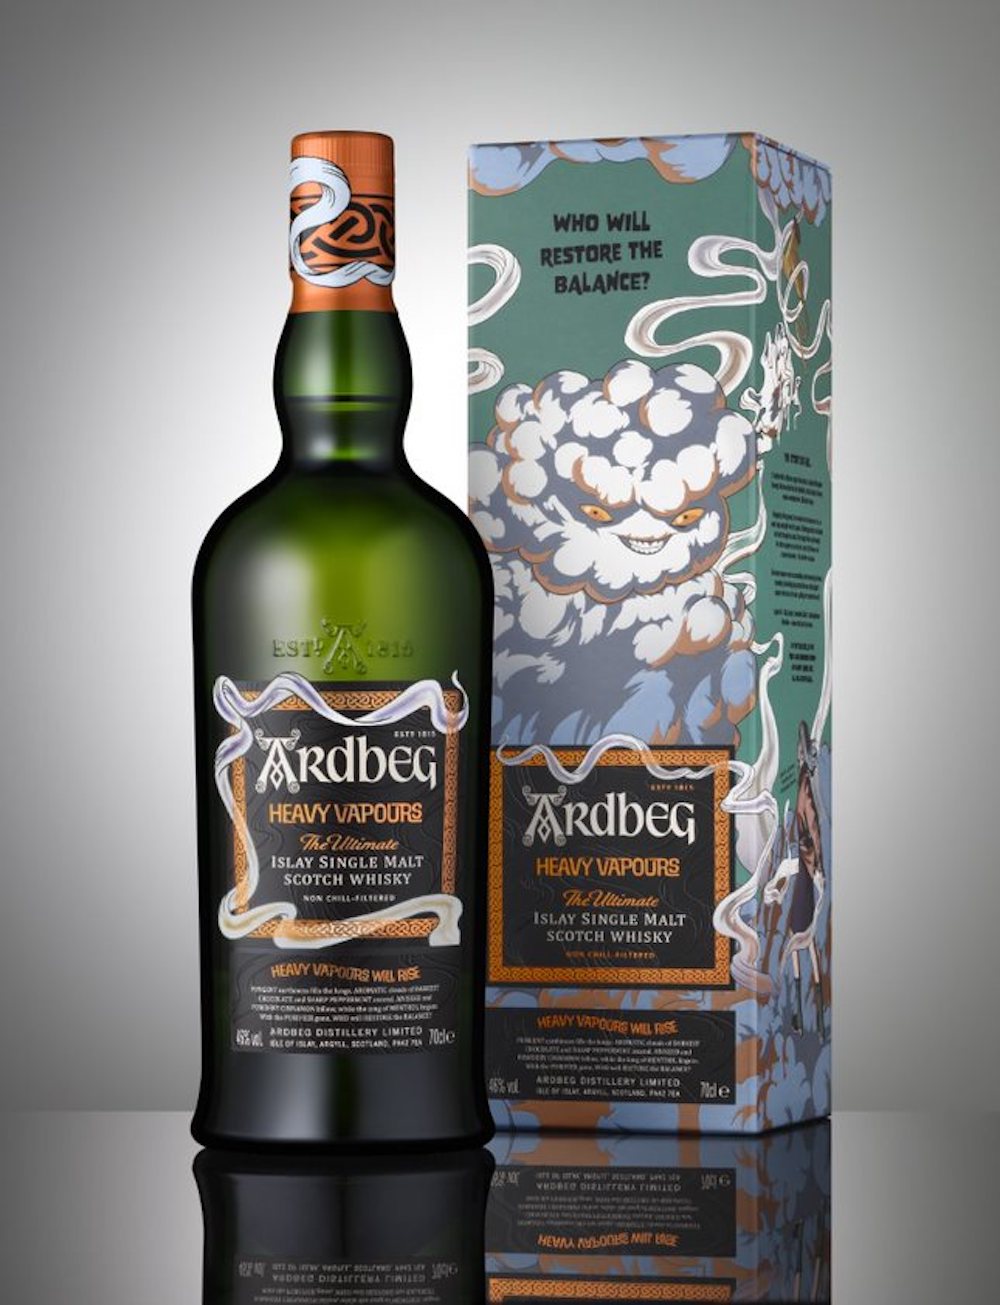 imagen 3 de Ardbeg Heavy Vapours, un whisky en edición limitada para celebrar el Ardbeg Day.